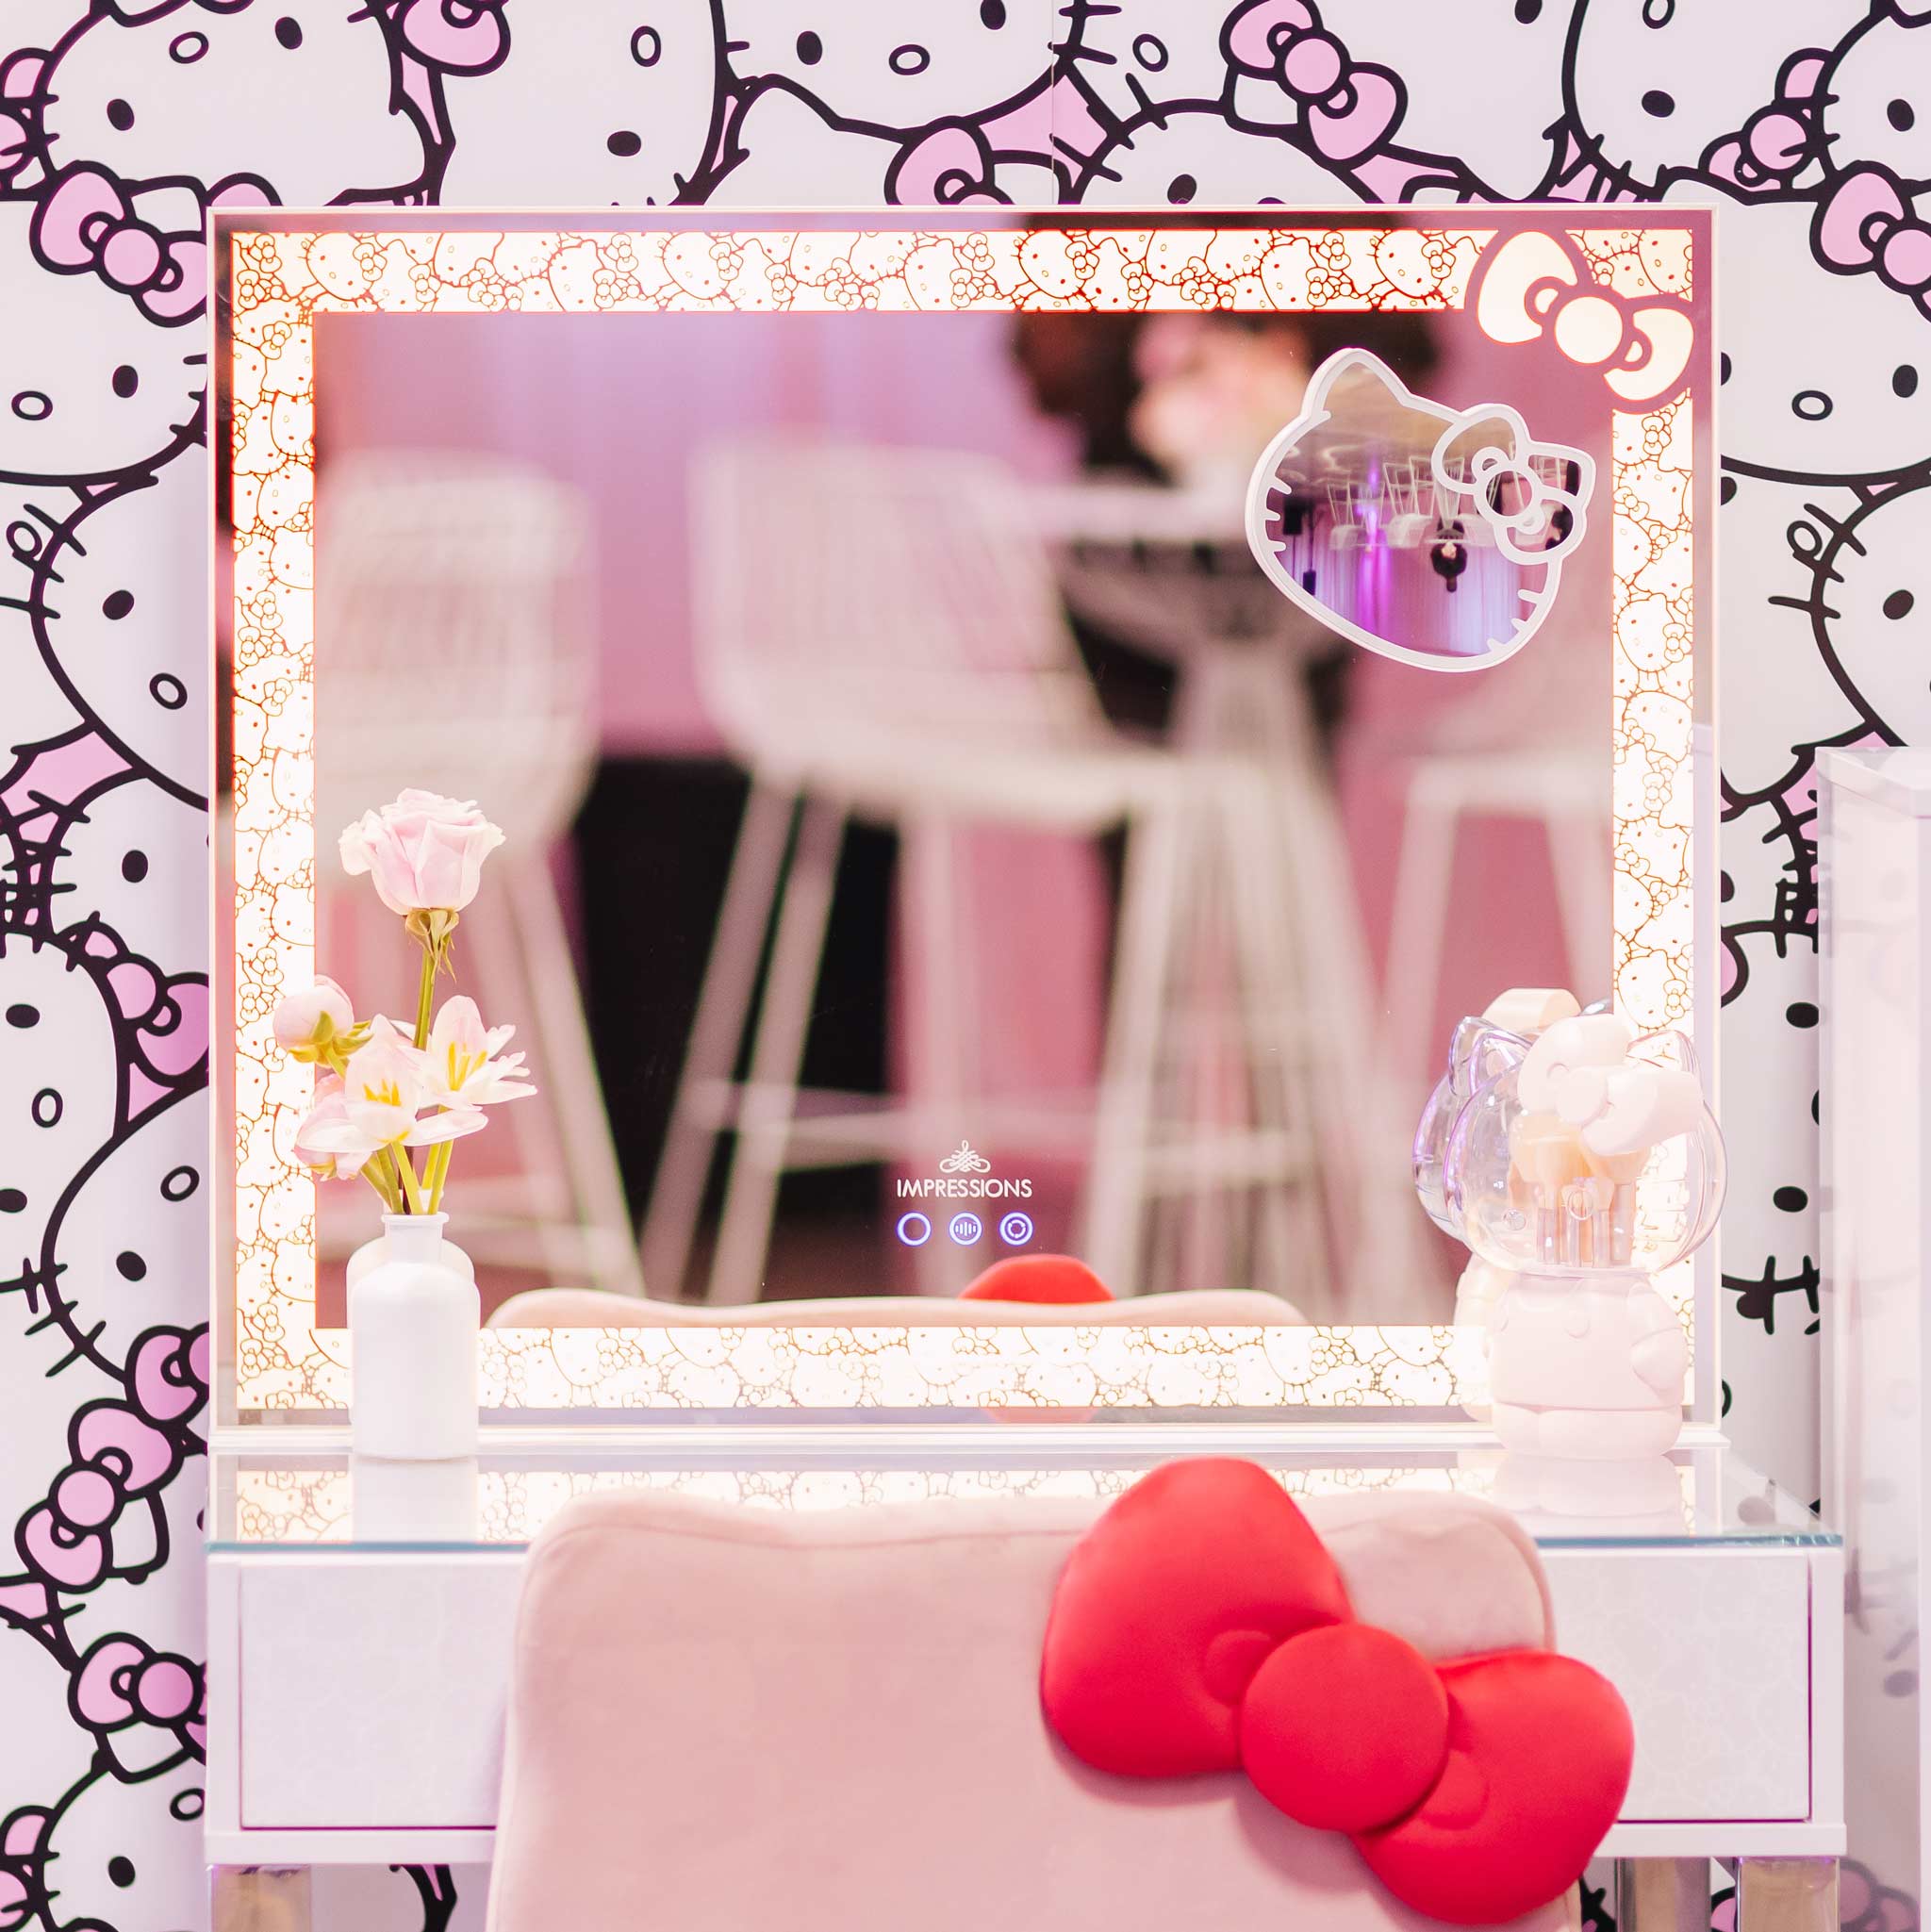 Hello Kitty® RGB PLUS All Over Vanity Mirror • Impressions